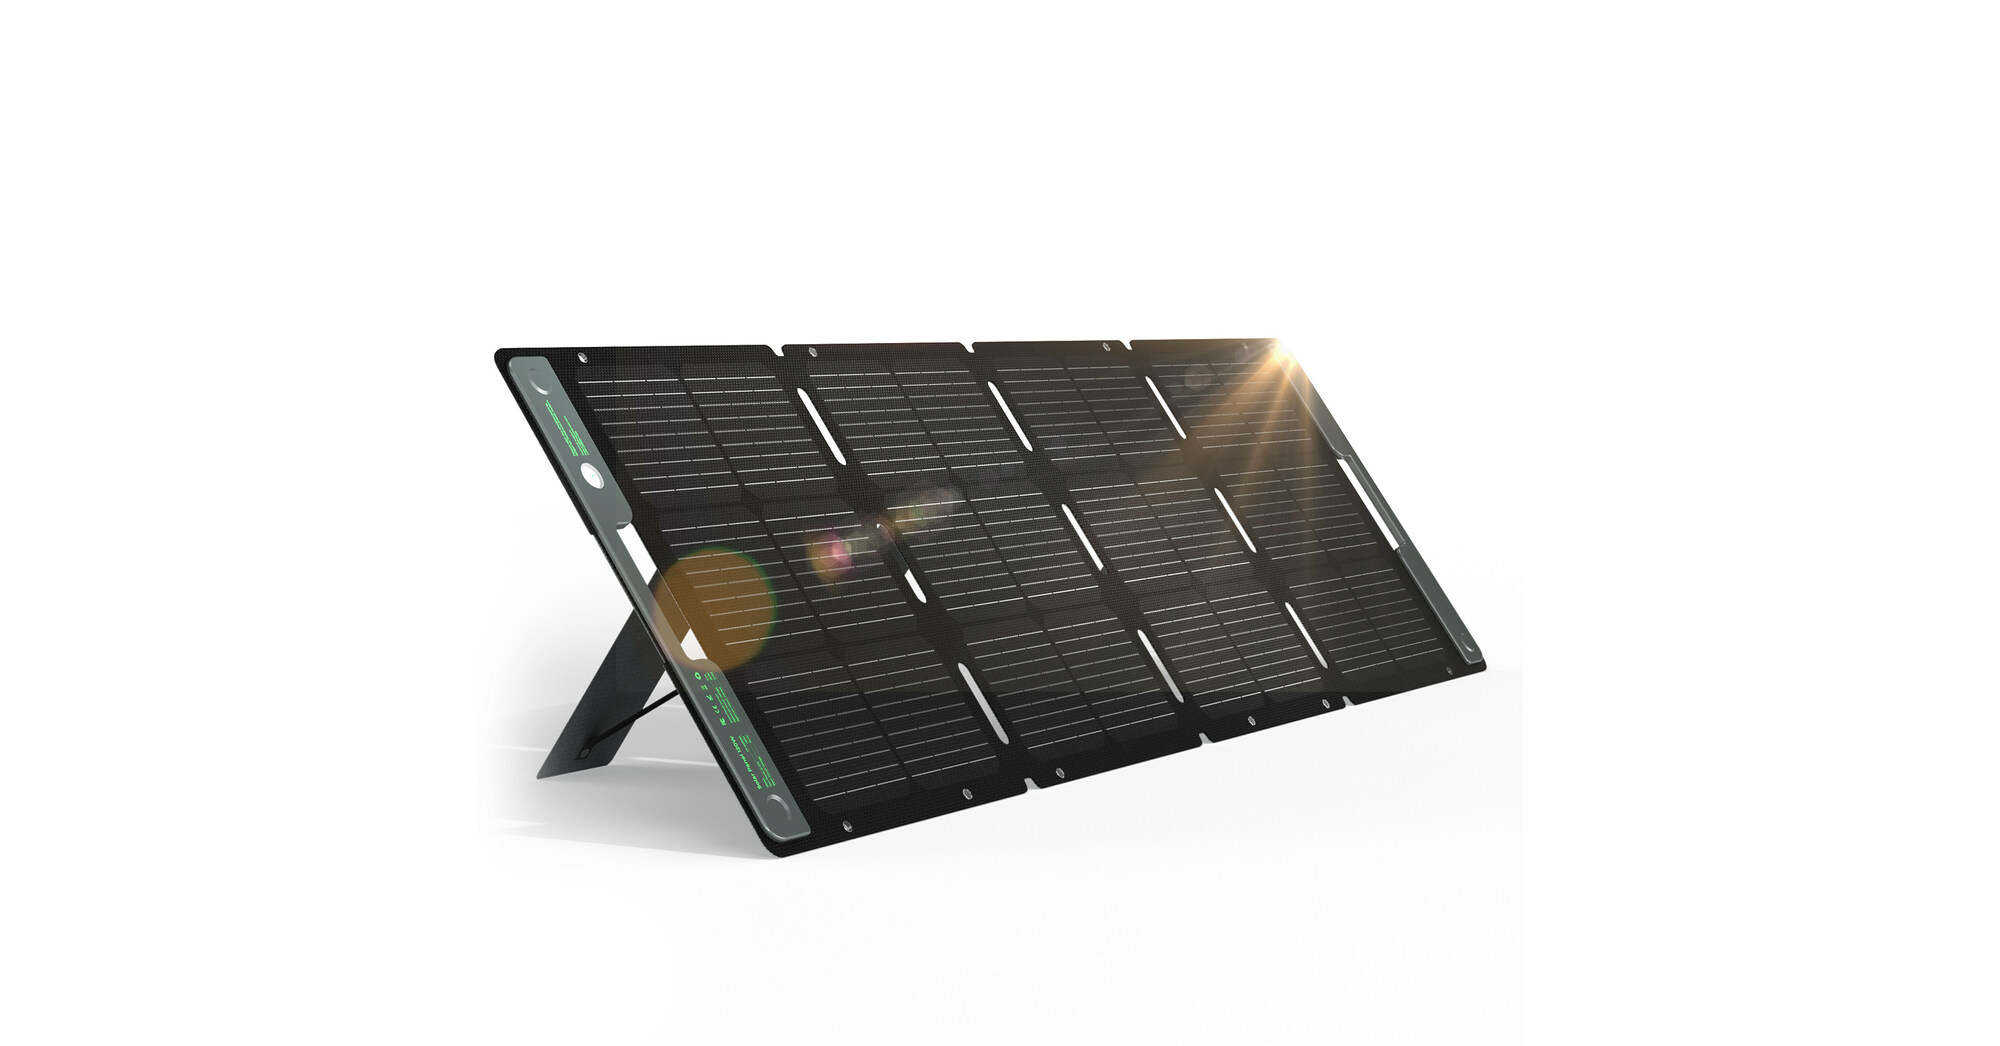 Collapsible 18 Led Portable Solar Camping Lantern (Green) - GEECR